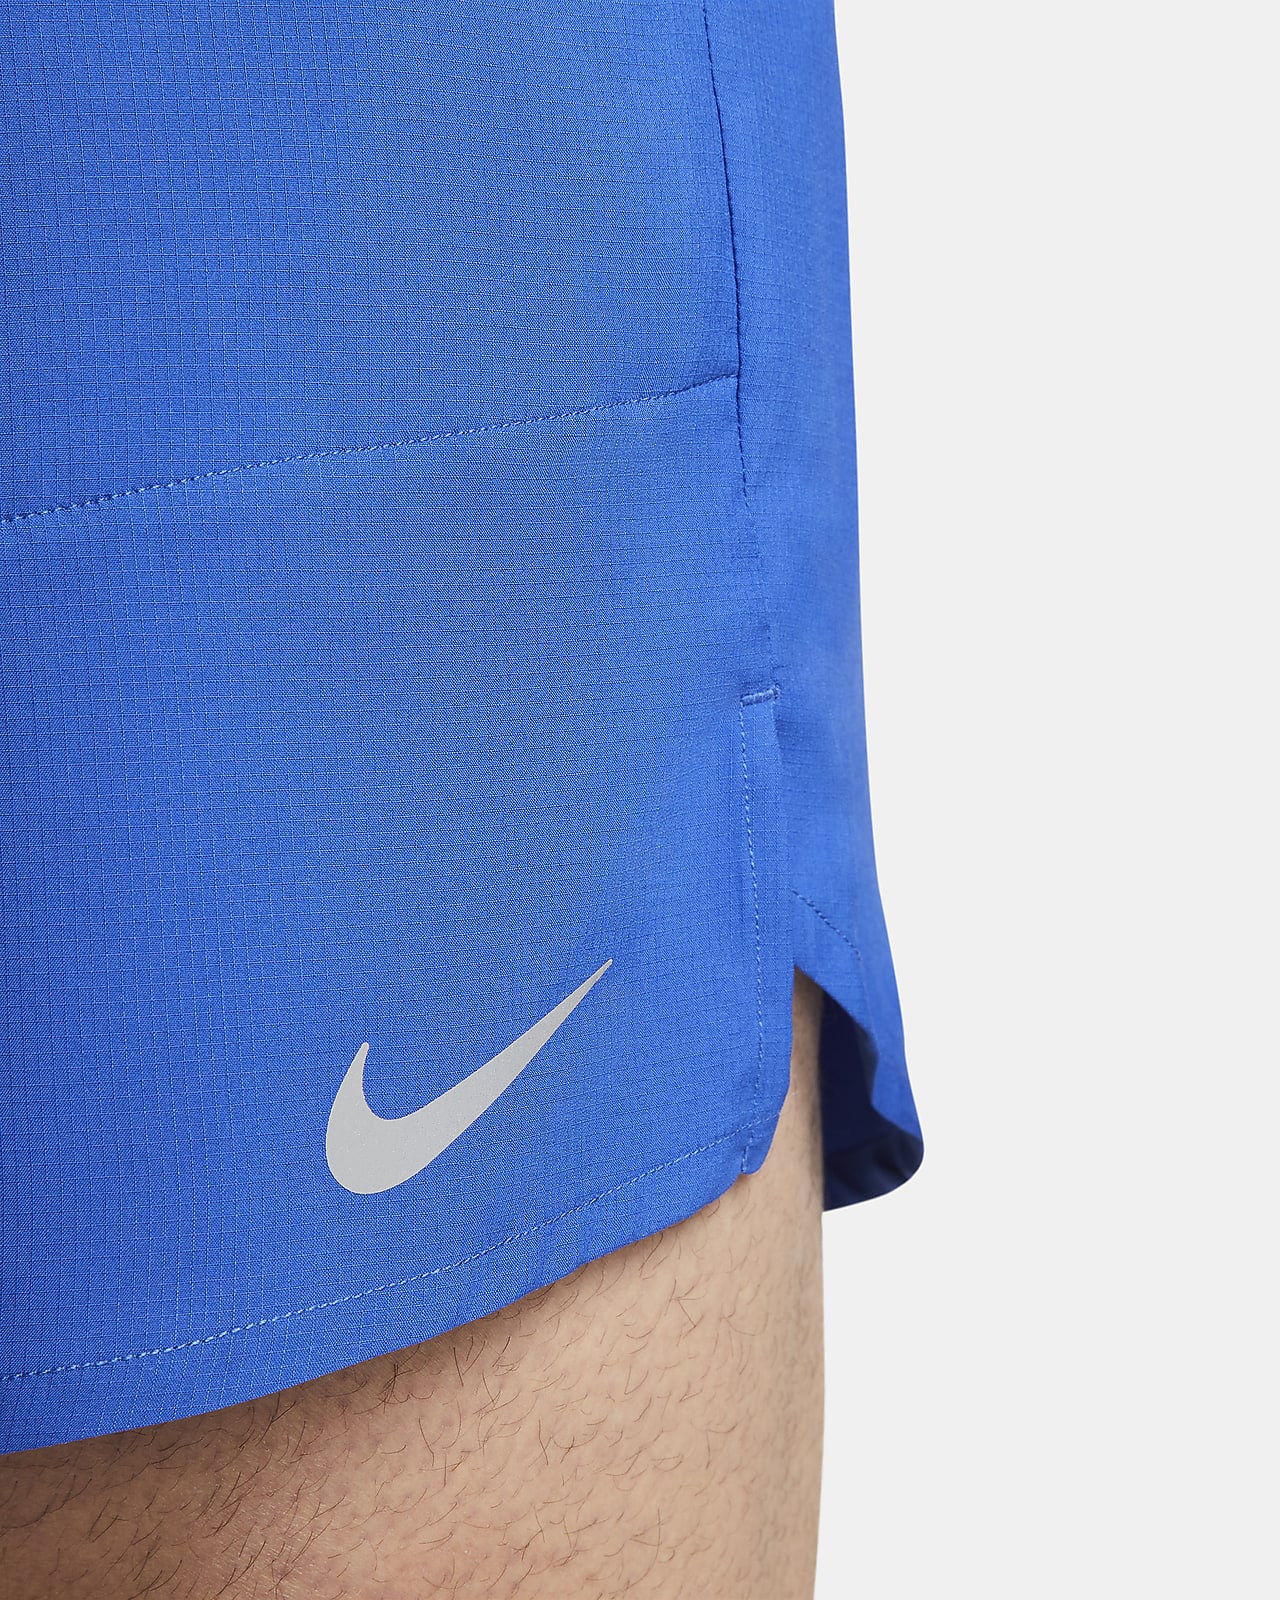 Nike Dri-FIT Stride 2 in 1 7in Men's Running Shorts - Olive Aura